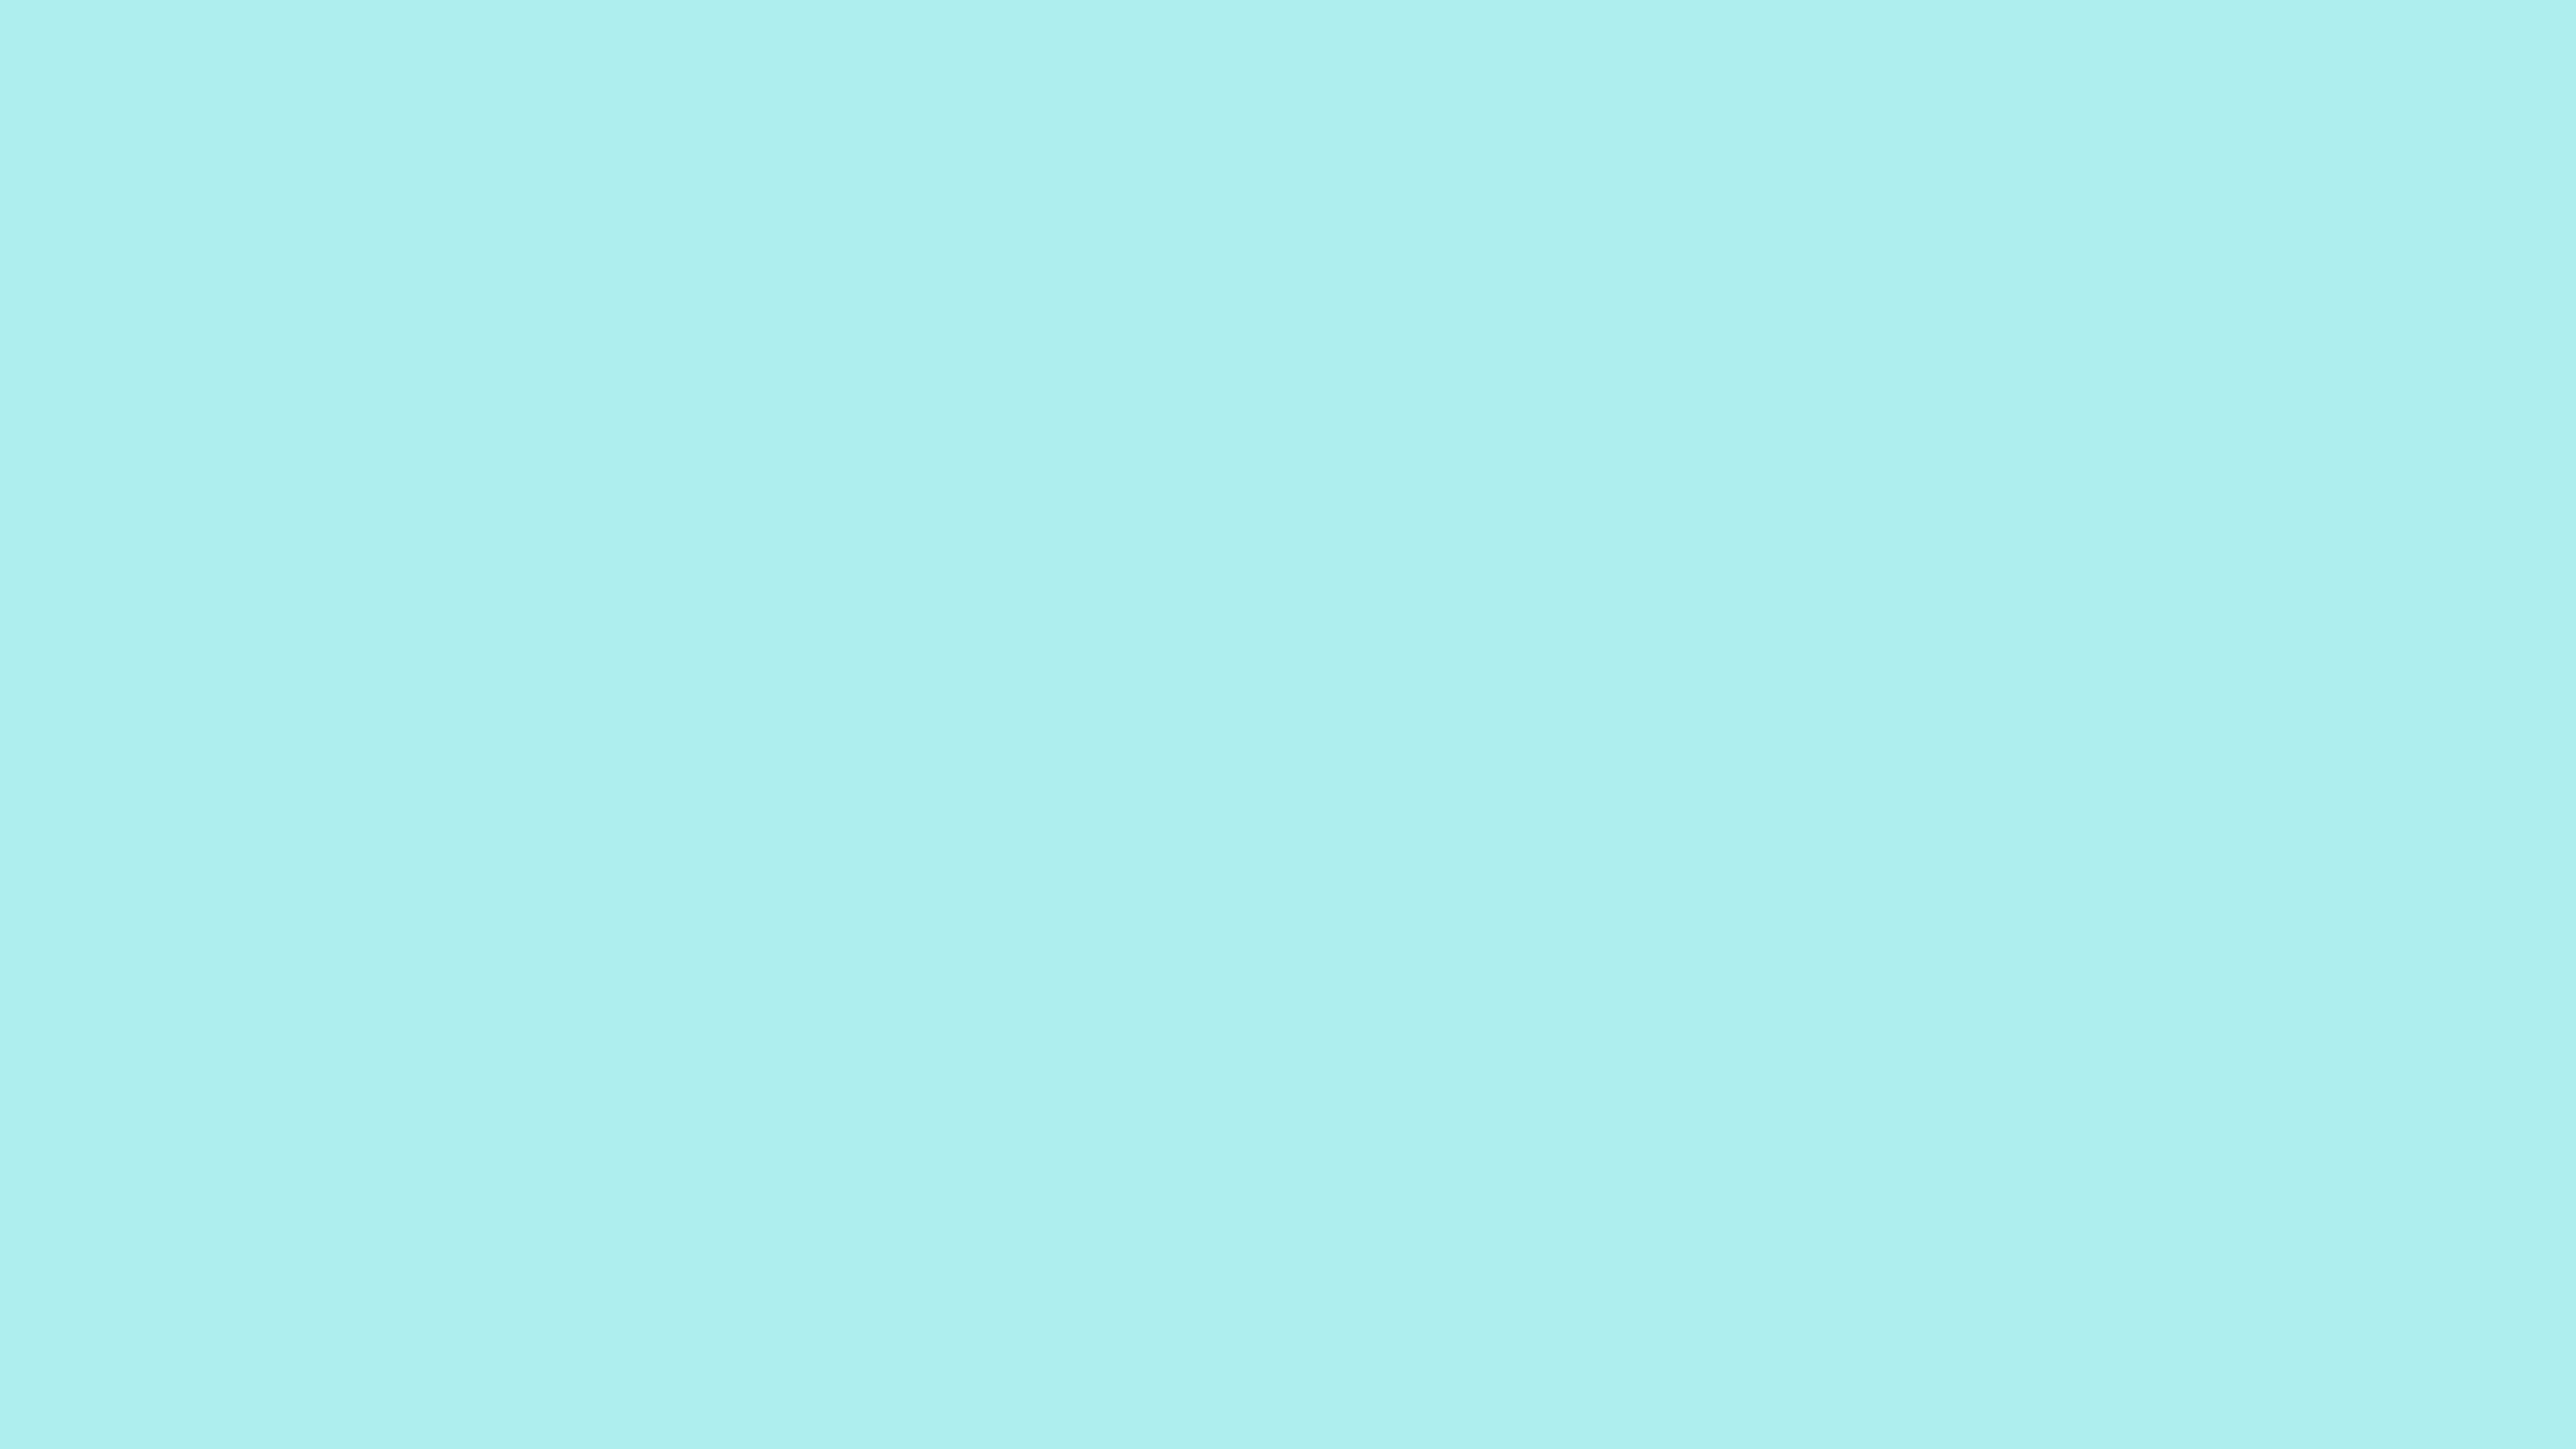 4096x2304 Pale Blue Solid Color Background